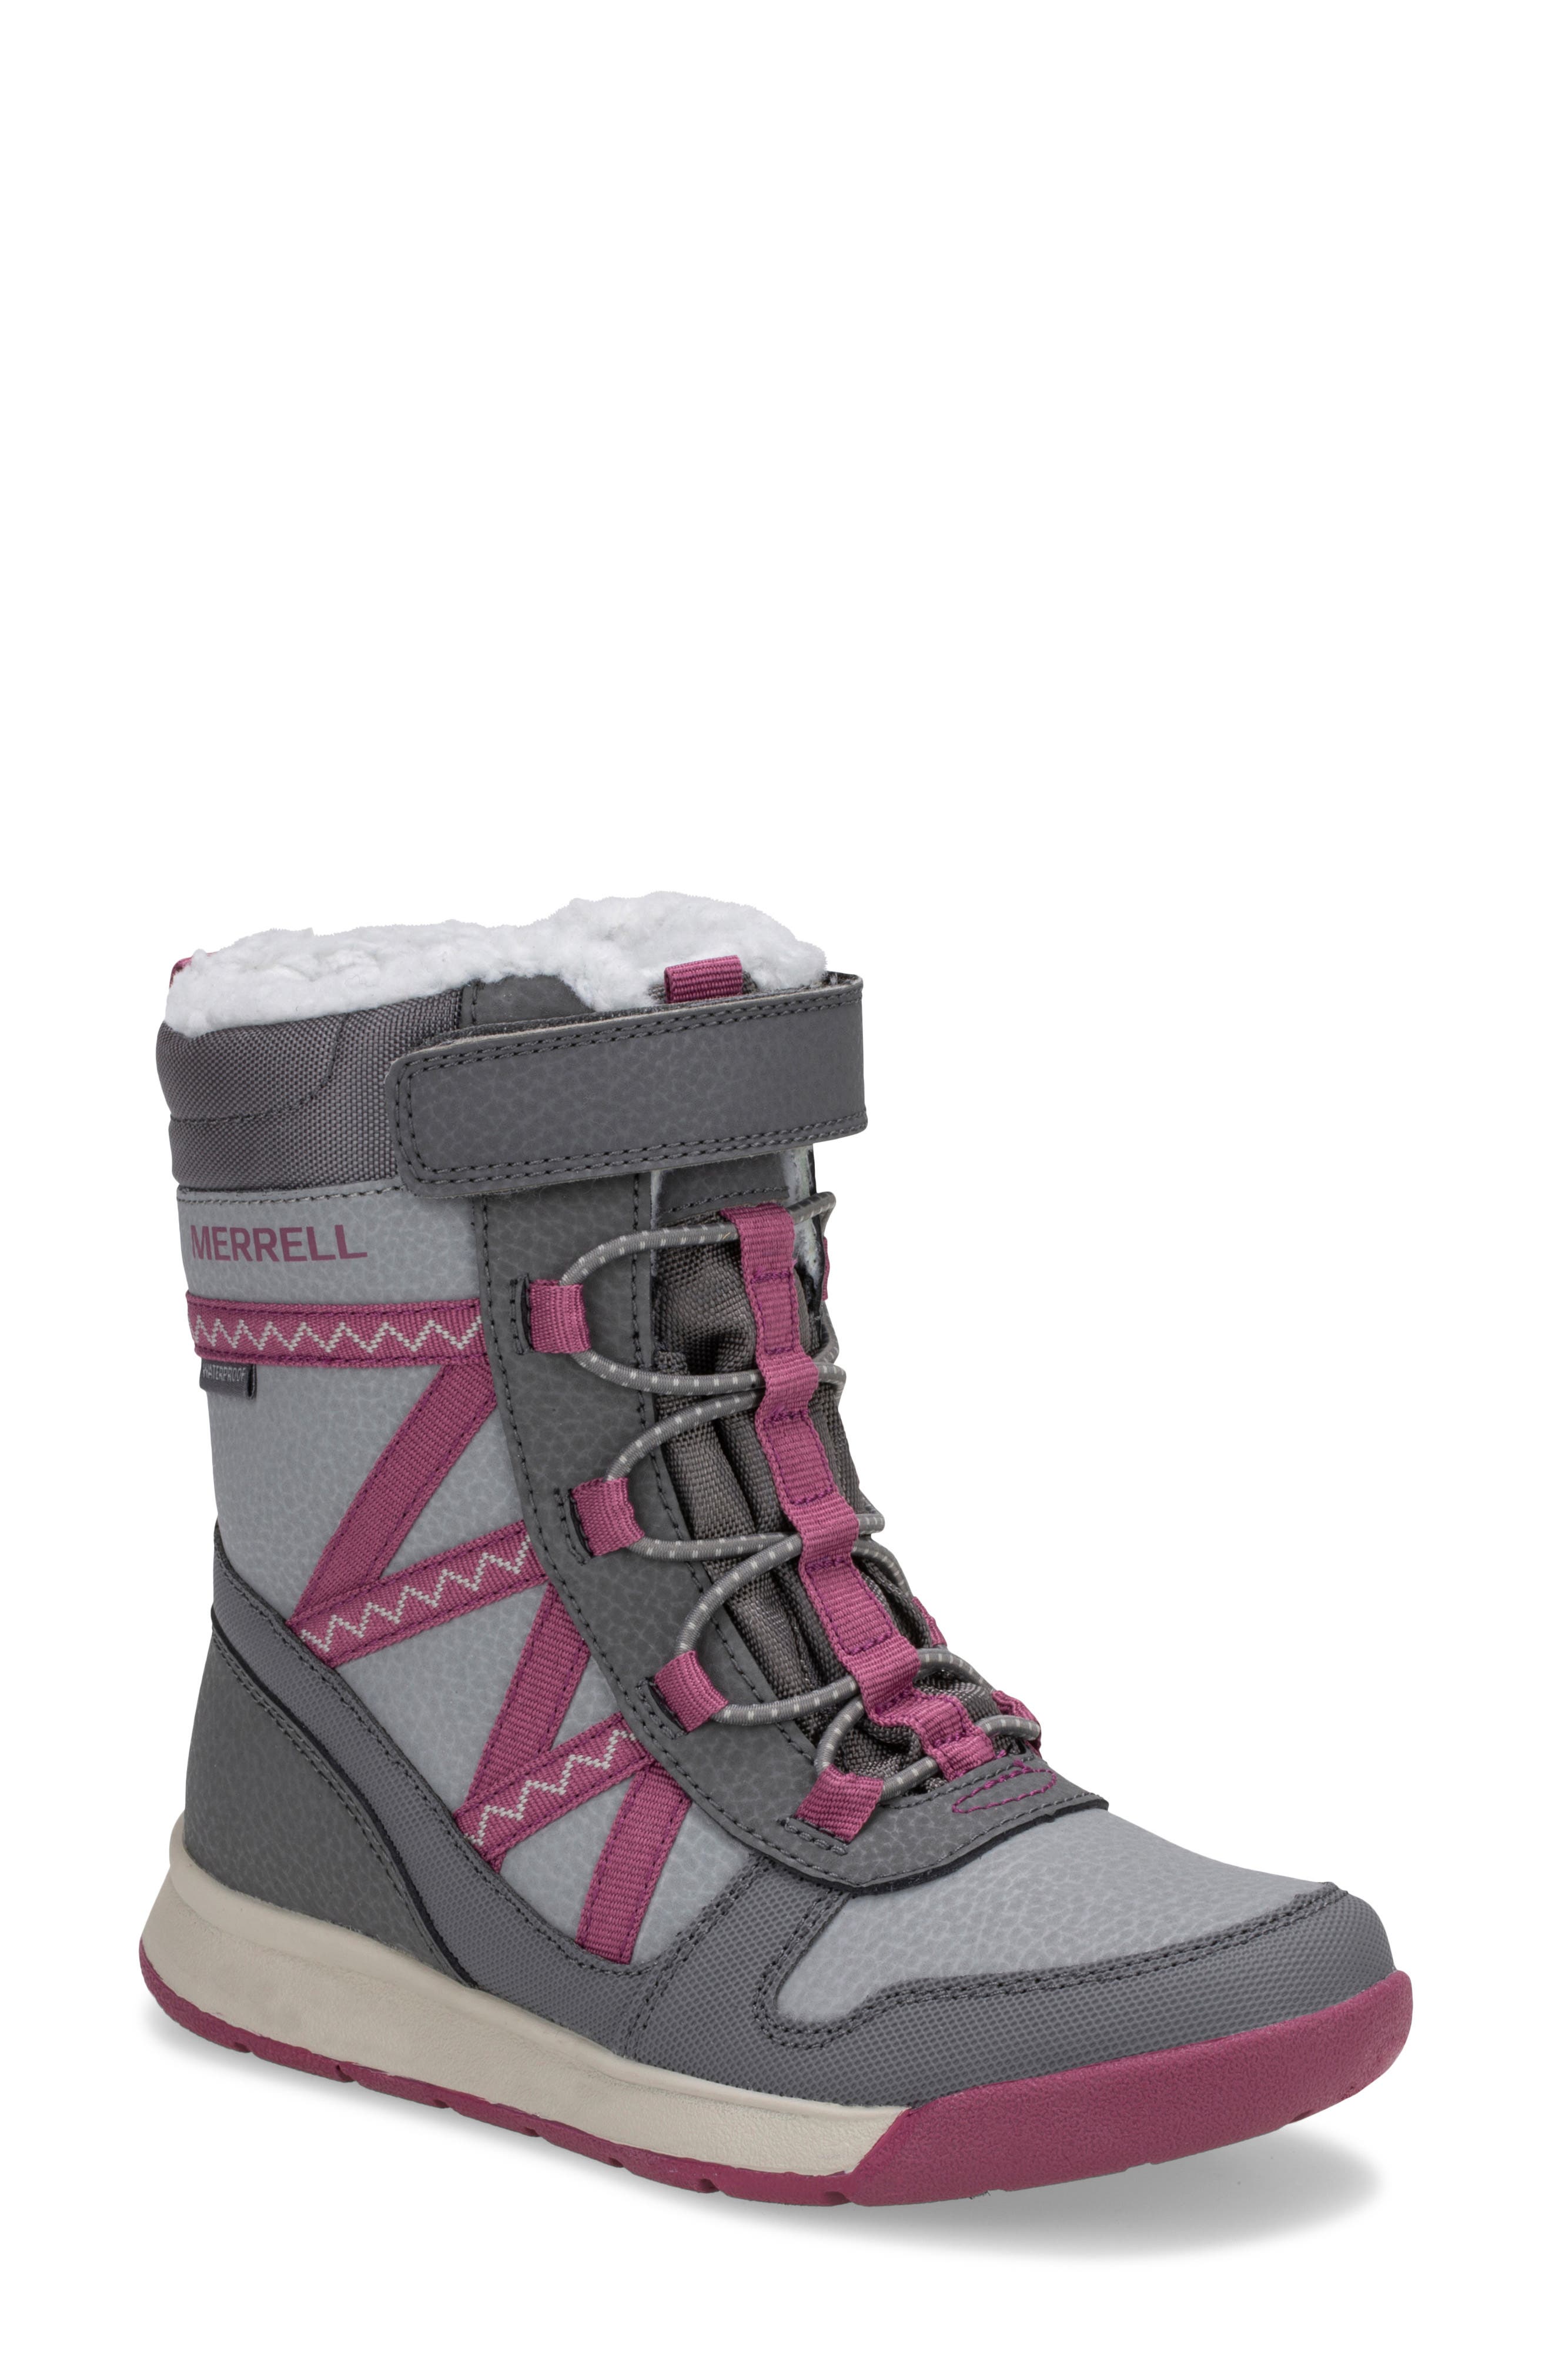 Brand New Girls Snow Boots Winter Deep Pink/Black Size 6-10 Toddler 